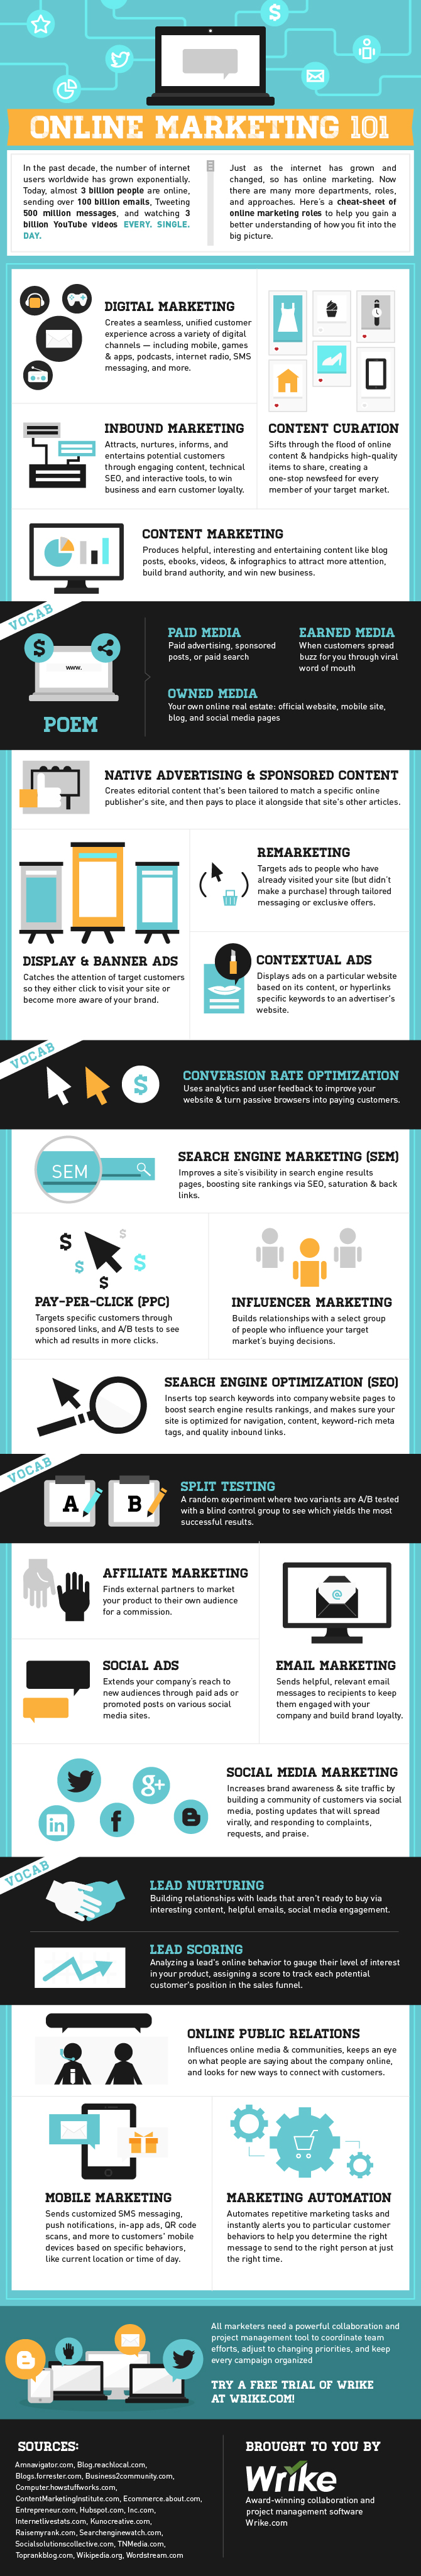 Online Marketing 101 Infographic